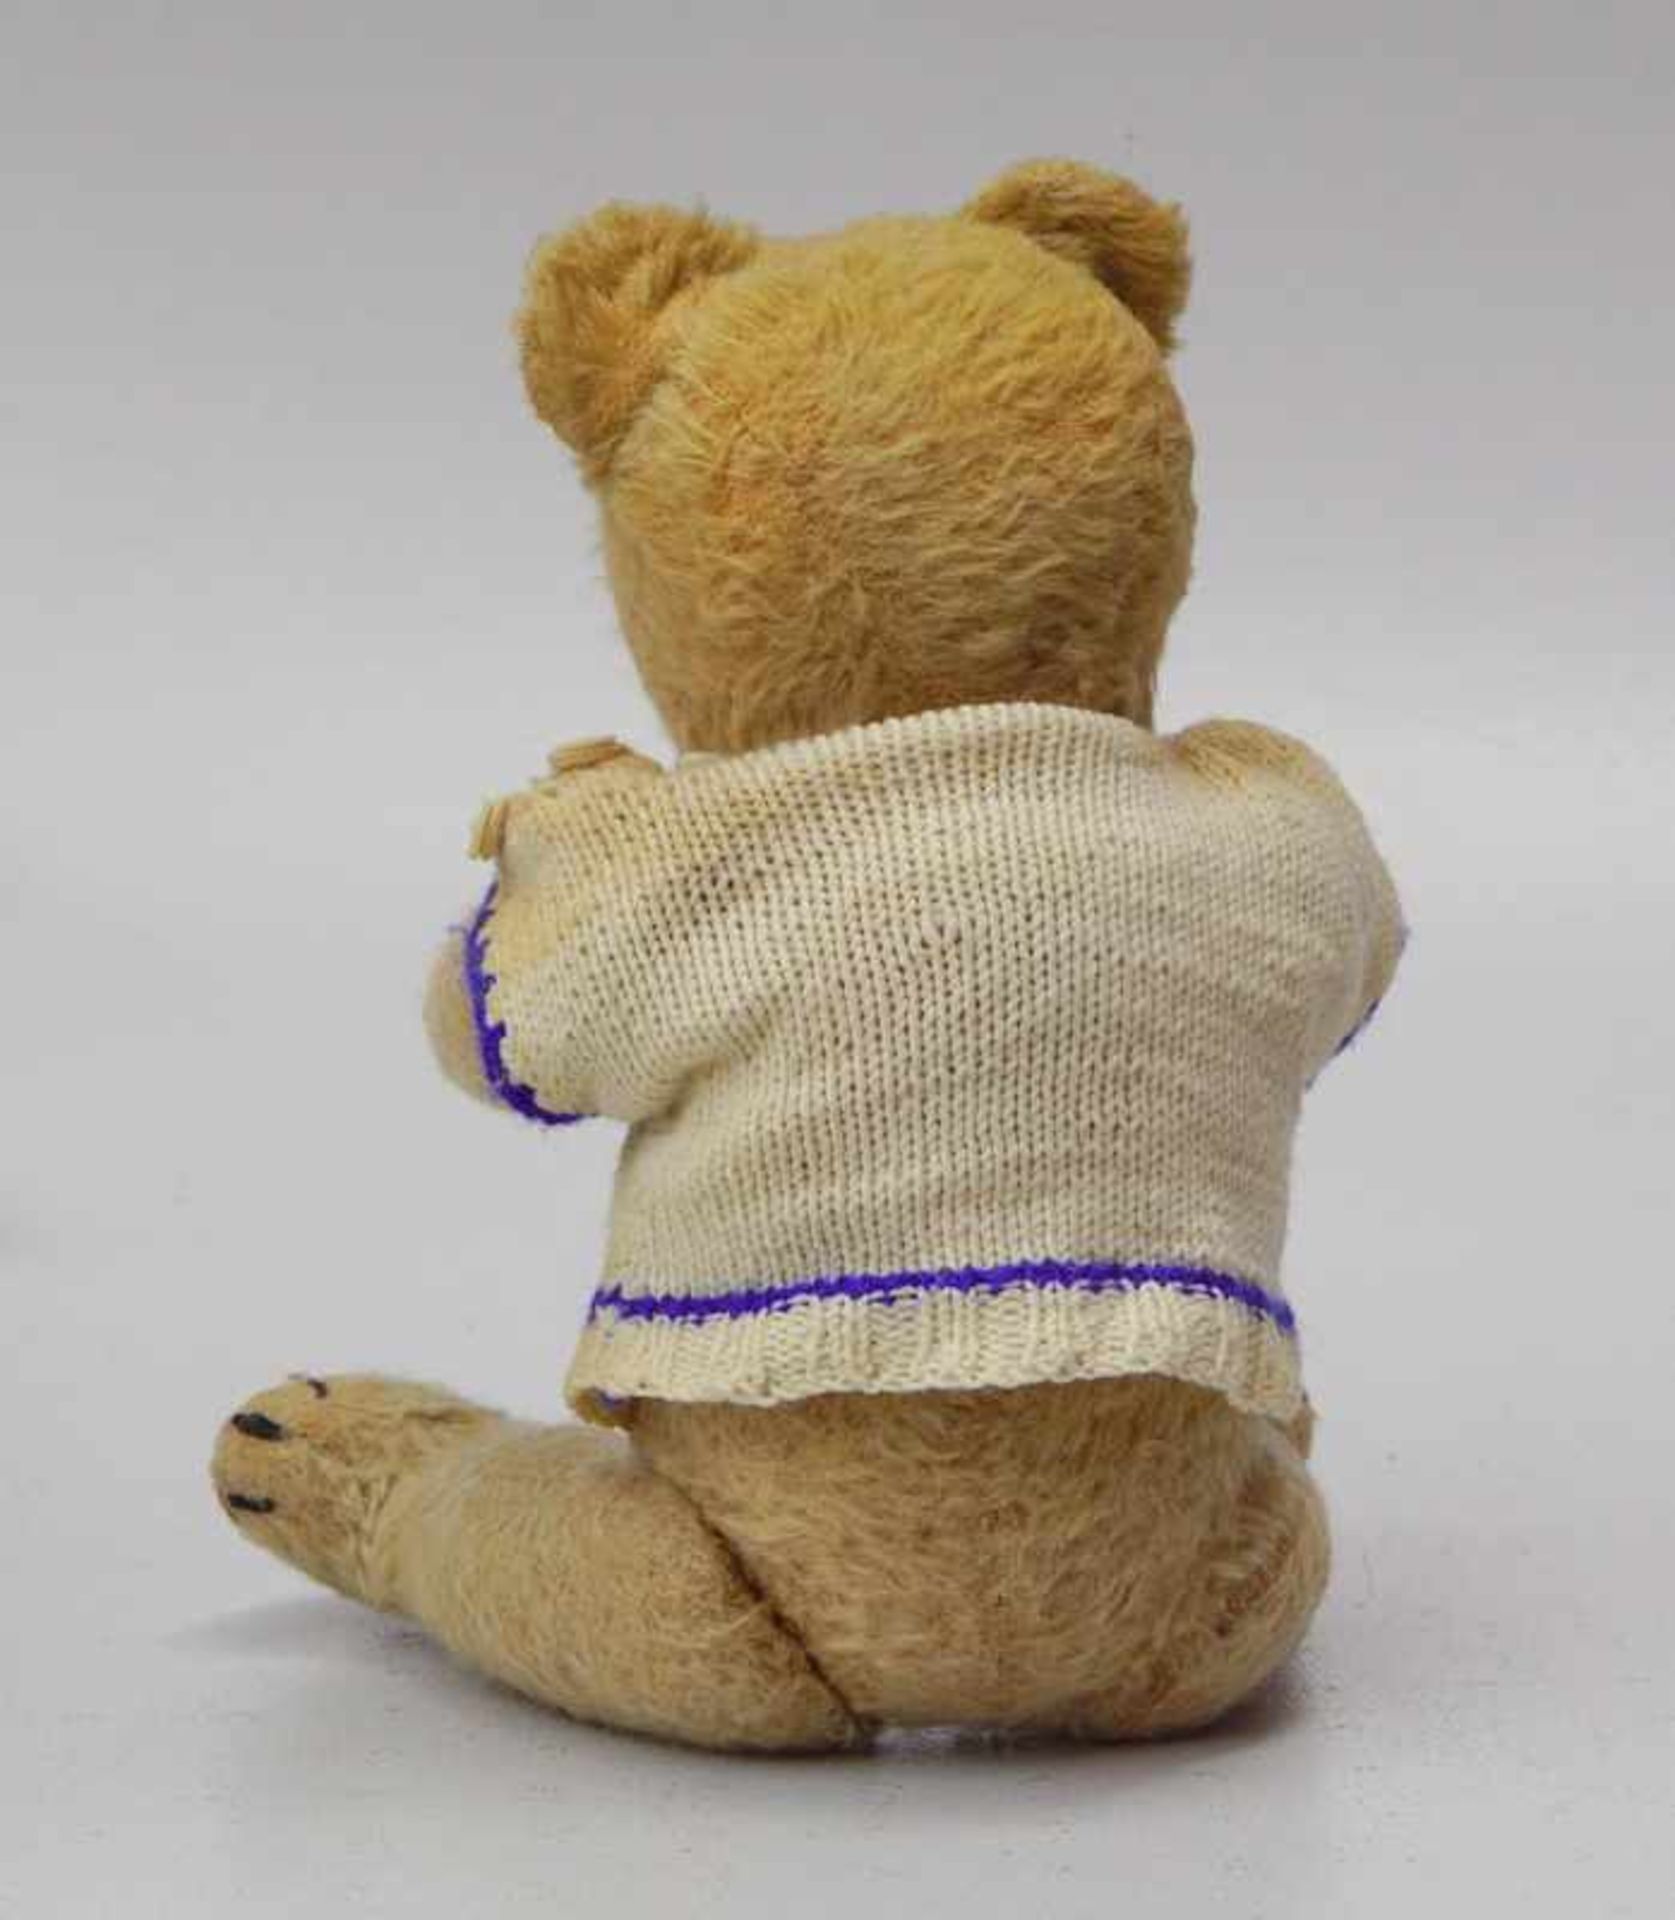 40: Großer Teddybär wohl Steiff Hellbraunes Fell (min. abgegriffen), Arme & Beine 360 Grad - Image 2 of 2